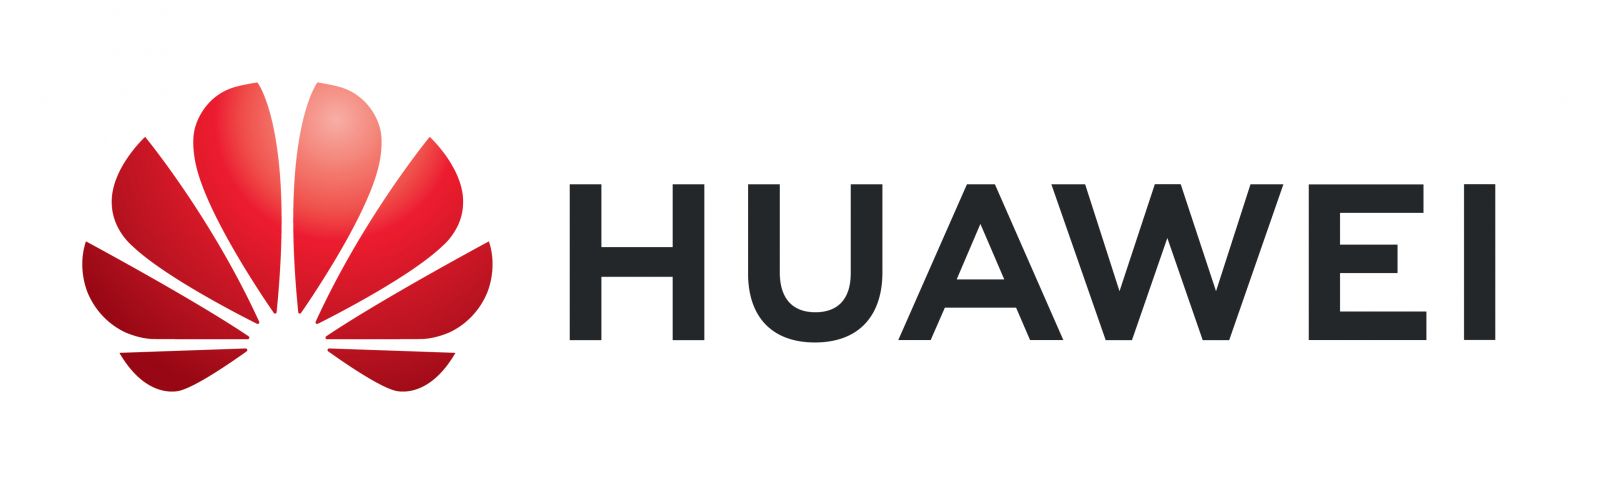 Huawei Yeni